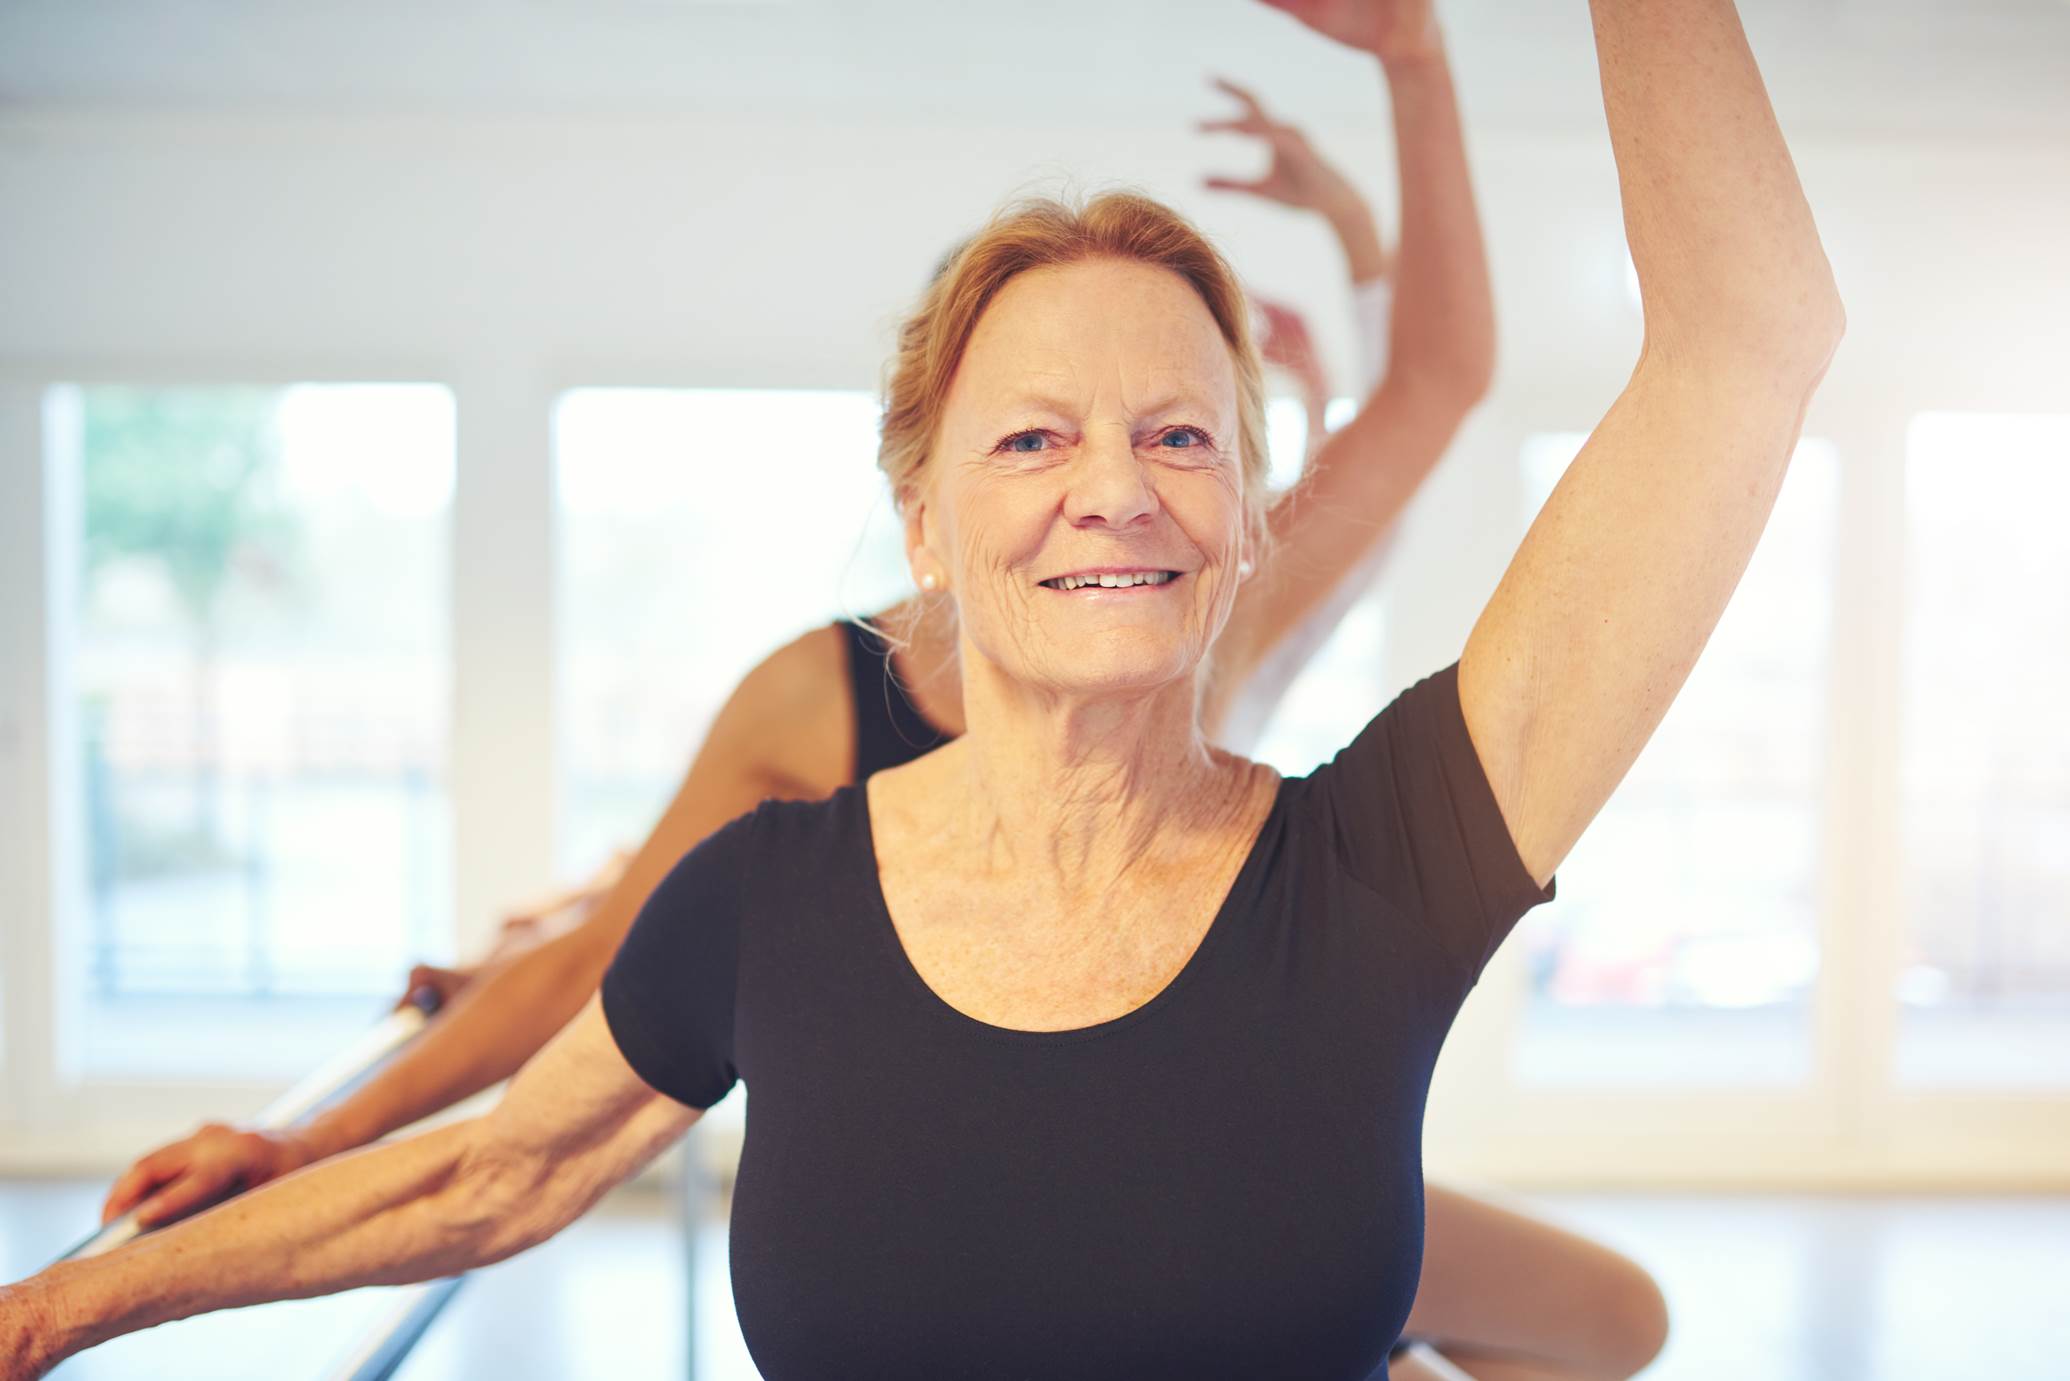  A senior citizen exercising and smiling 